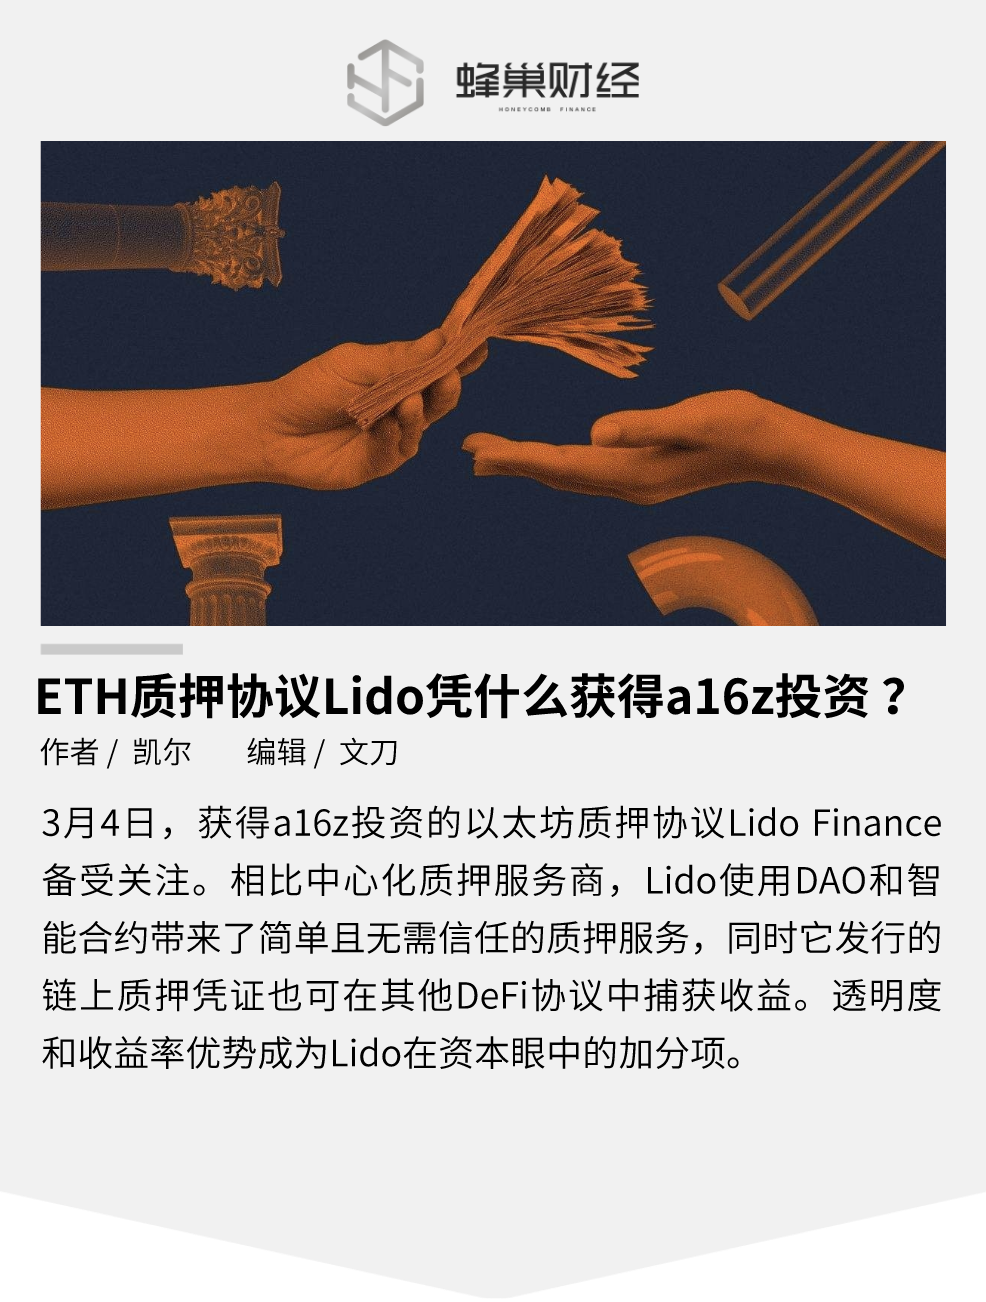 ETH质押协议Lido为何获得a16z投资？